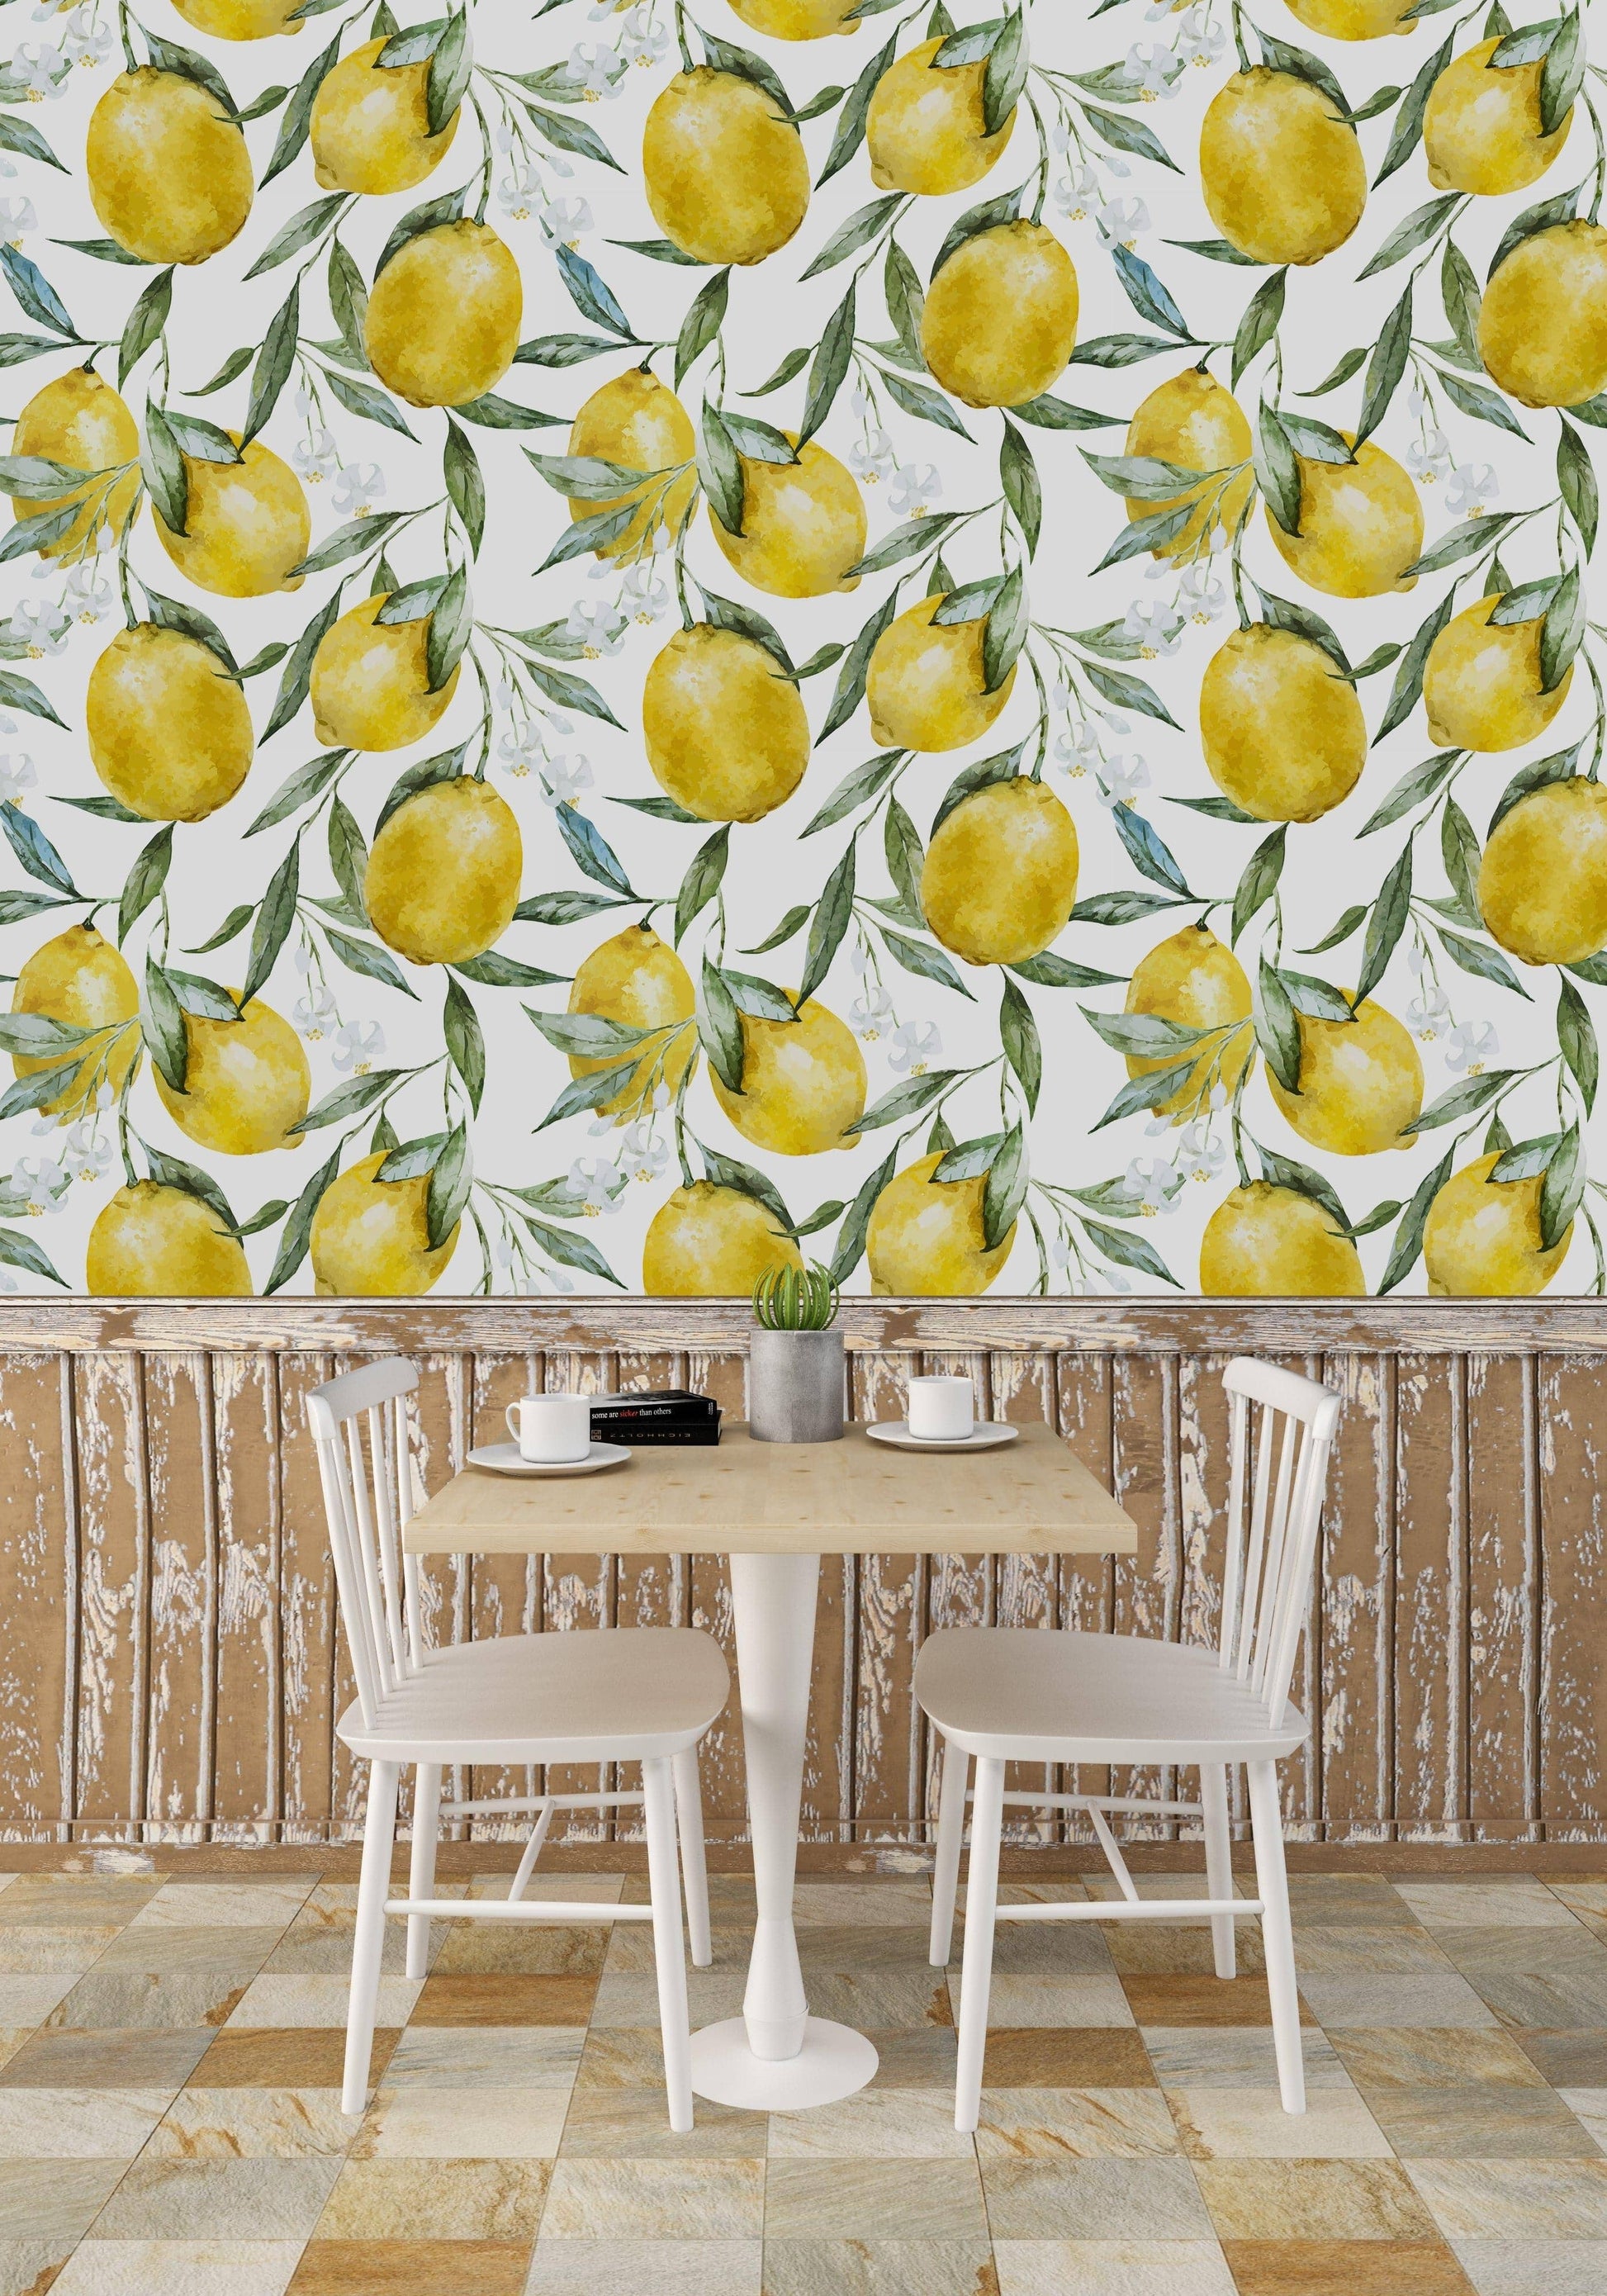 Yellow Lemons Fruit Kitchen Removable Wallpaper Yellow Lemon Green Fruit Kitchen Removable Wallpaper 